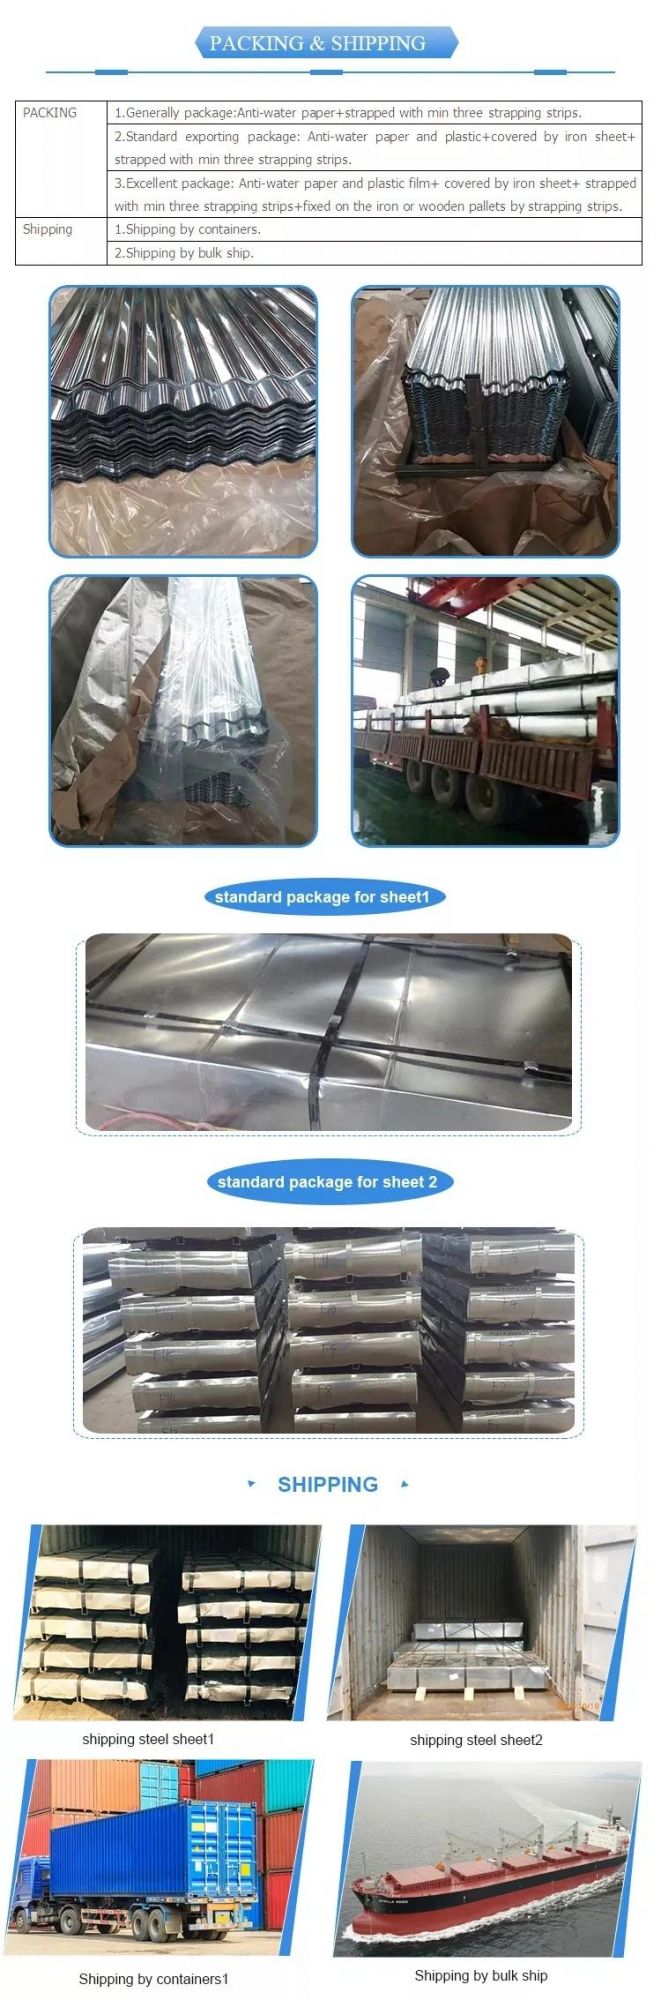 GB DIN Zhongxiang Sea Standard Gi Corrugated Steel Roofing Sheet